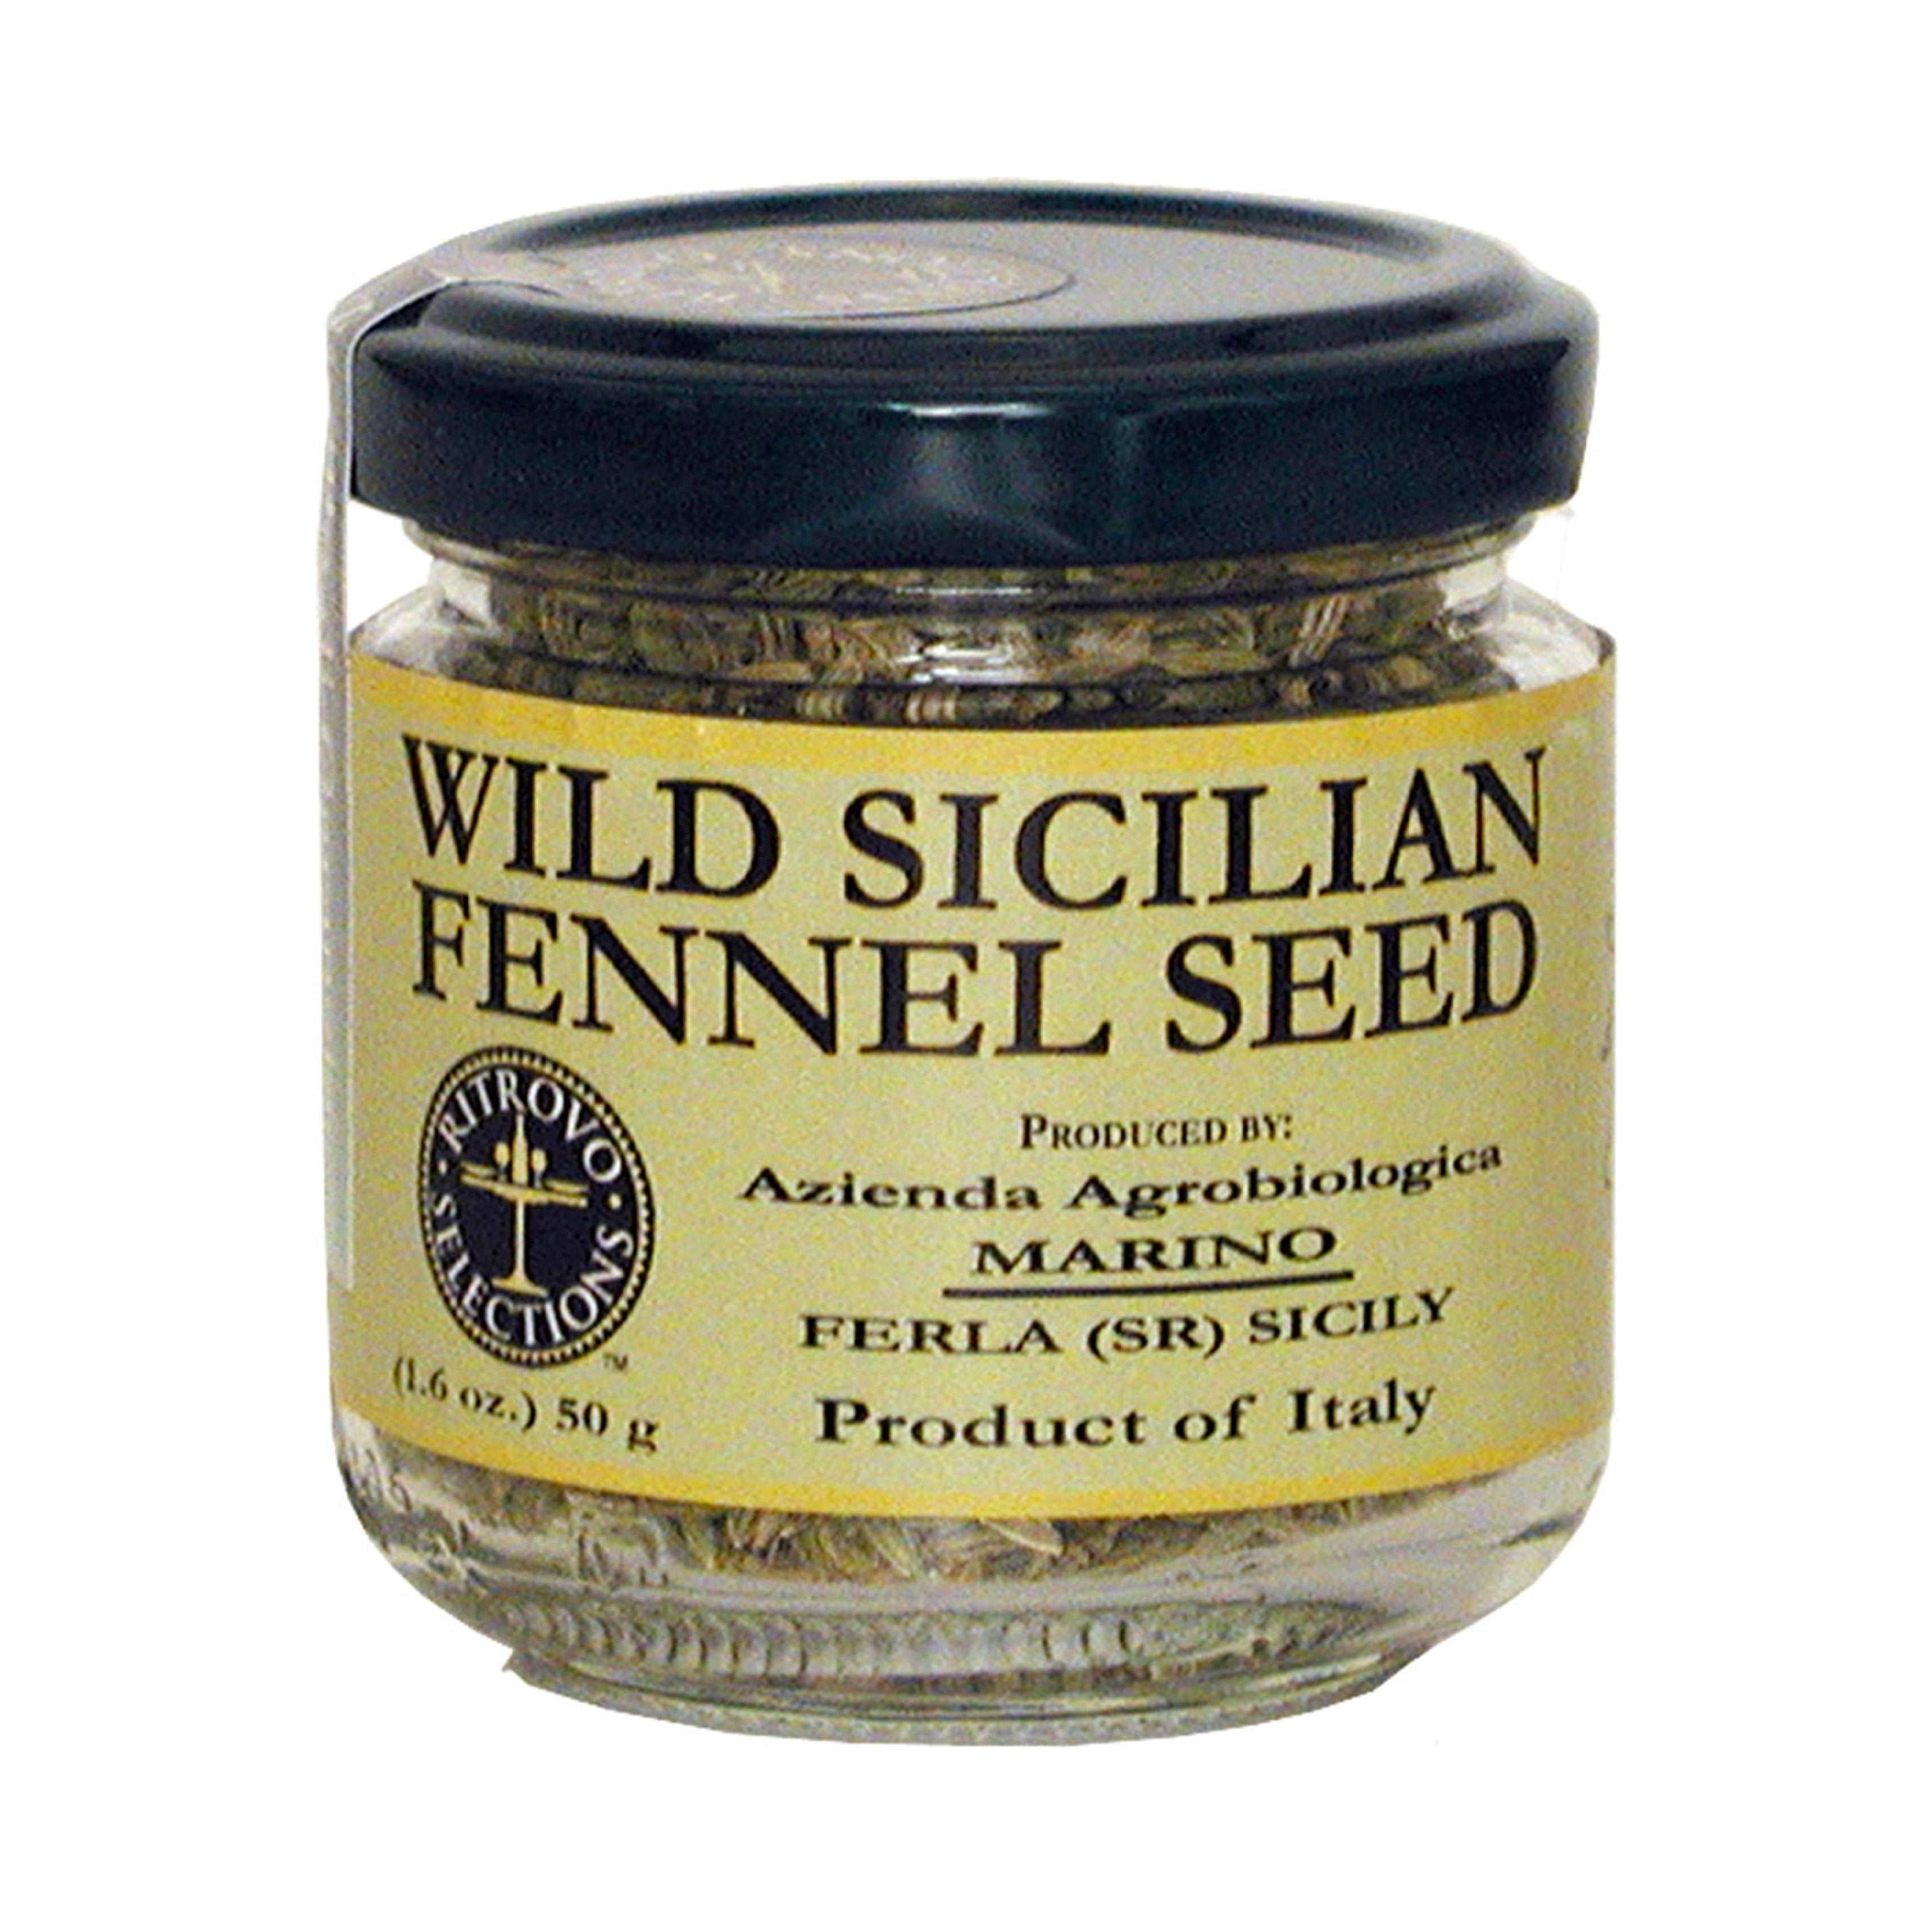 Harvesting Fennel Seeds - How to Harvest Wild Fennel Seeds